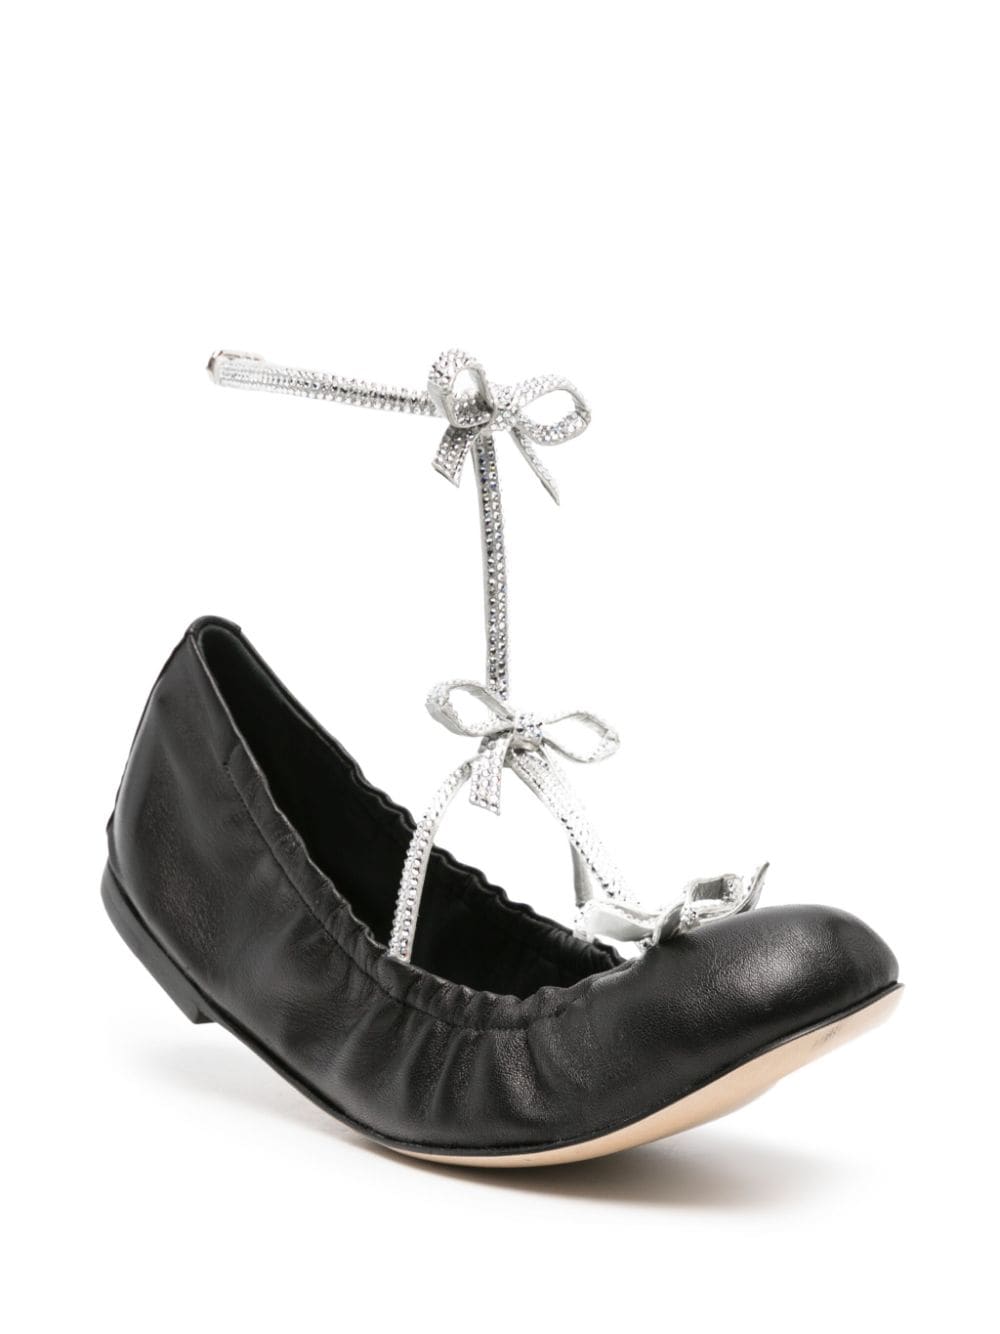 Rene' Caovilla Flat Shoes Black